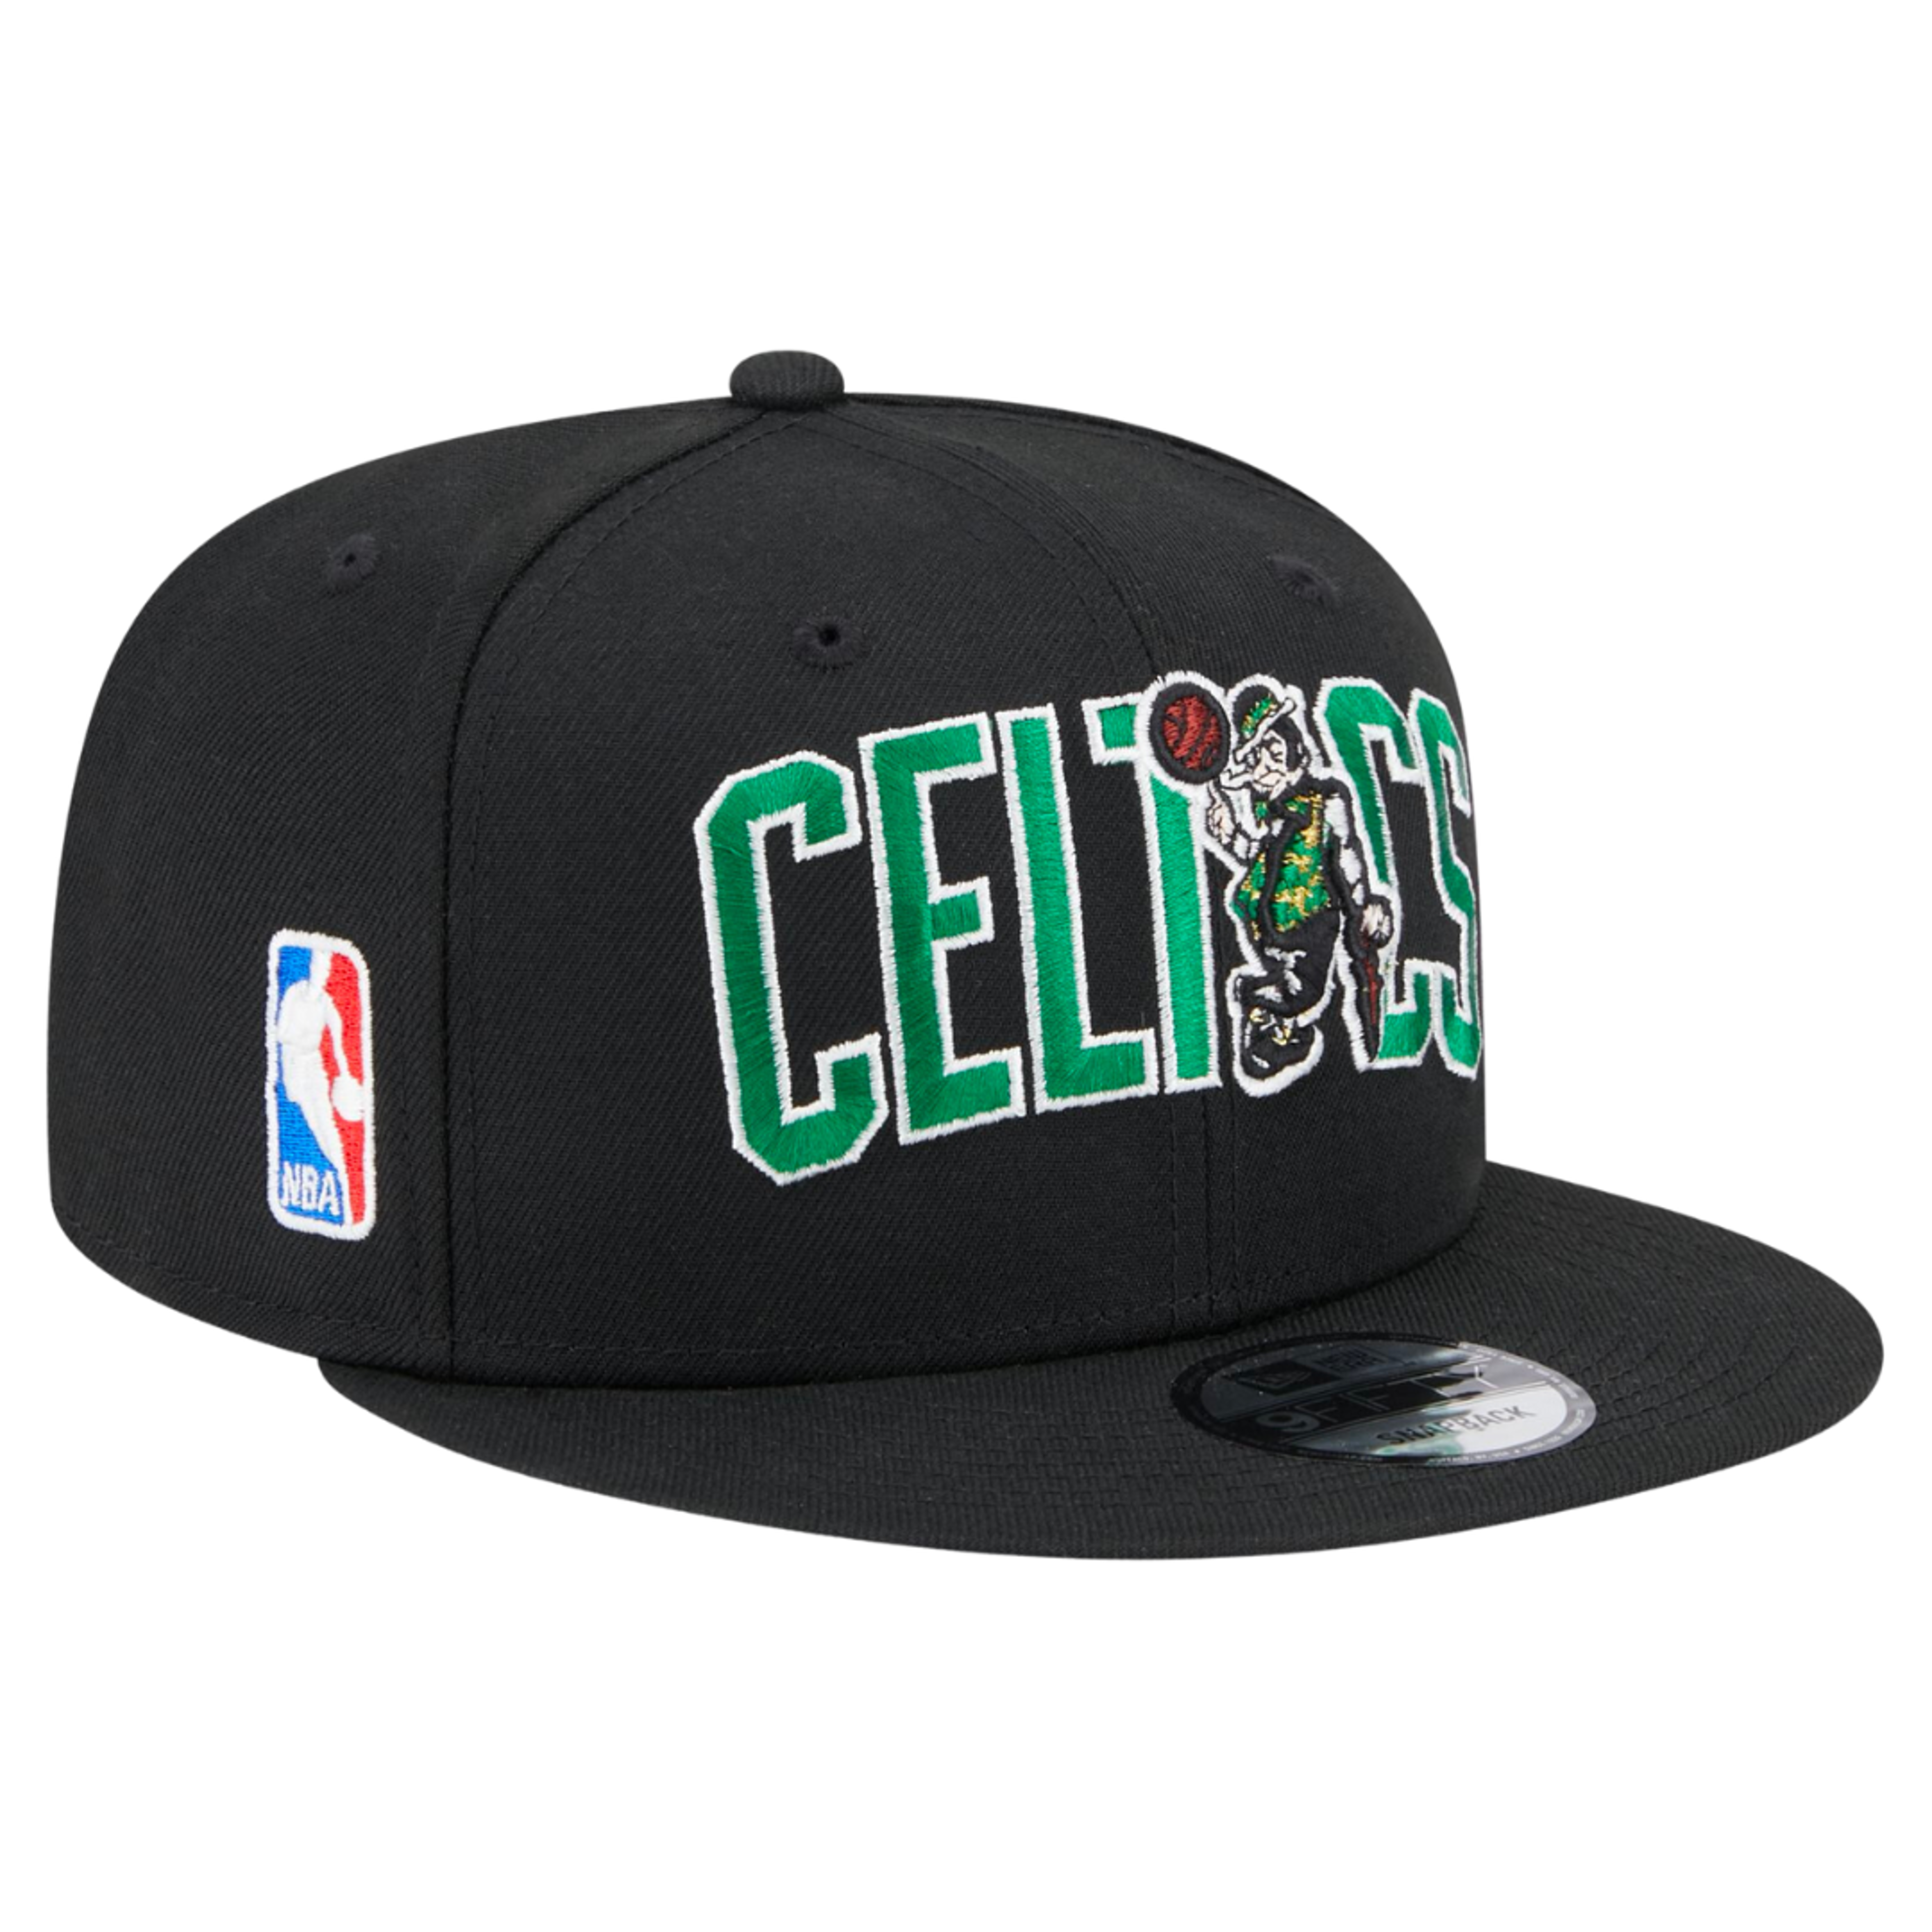 Boston Celtics 9FIFTY Snapback Hat